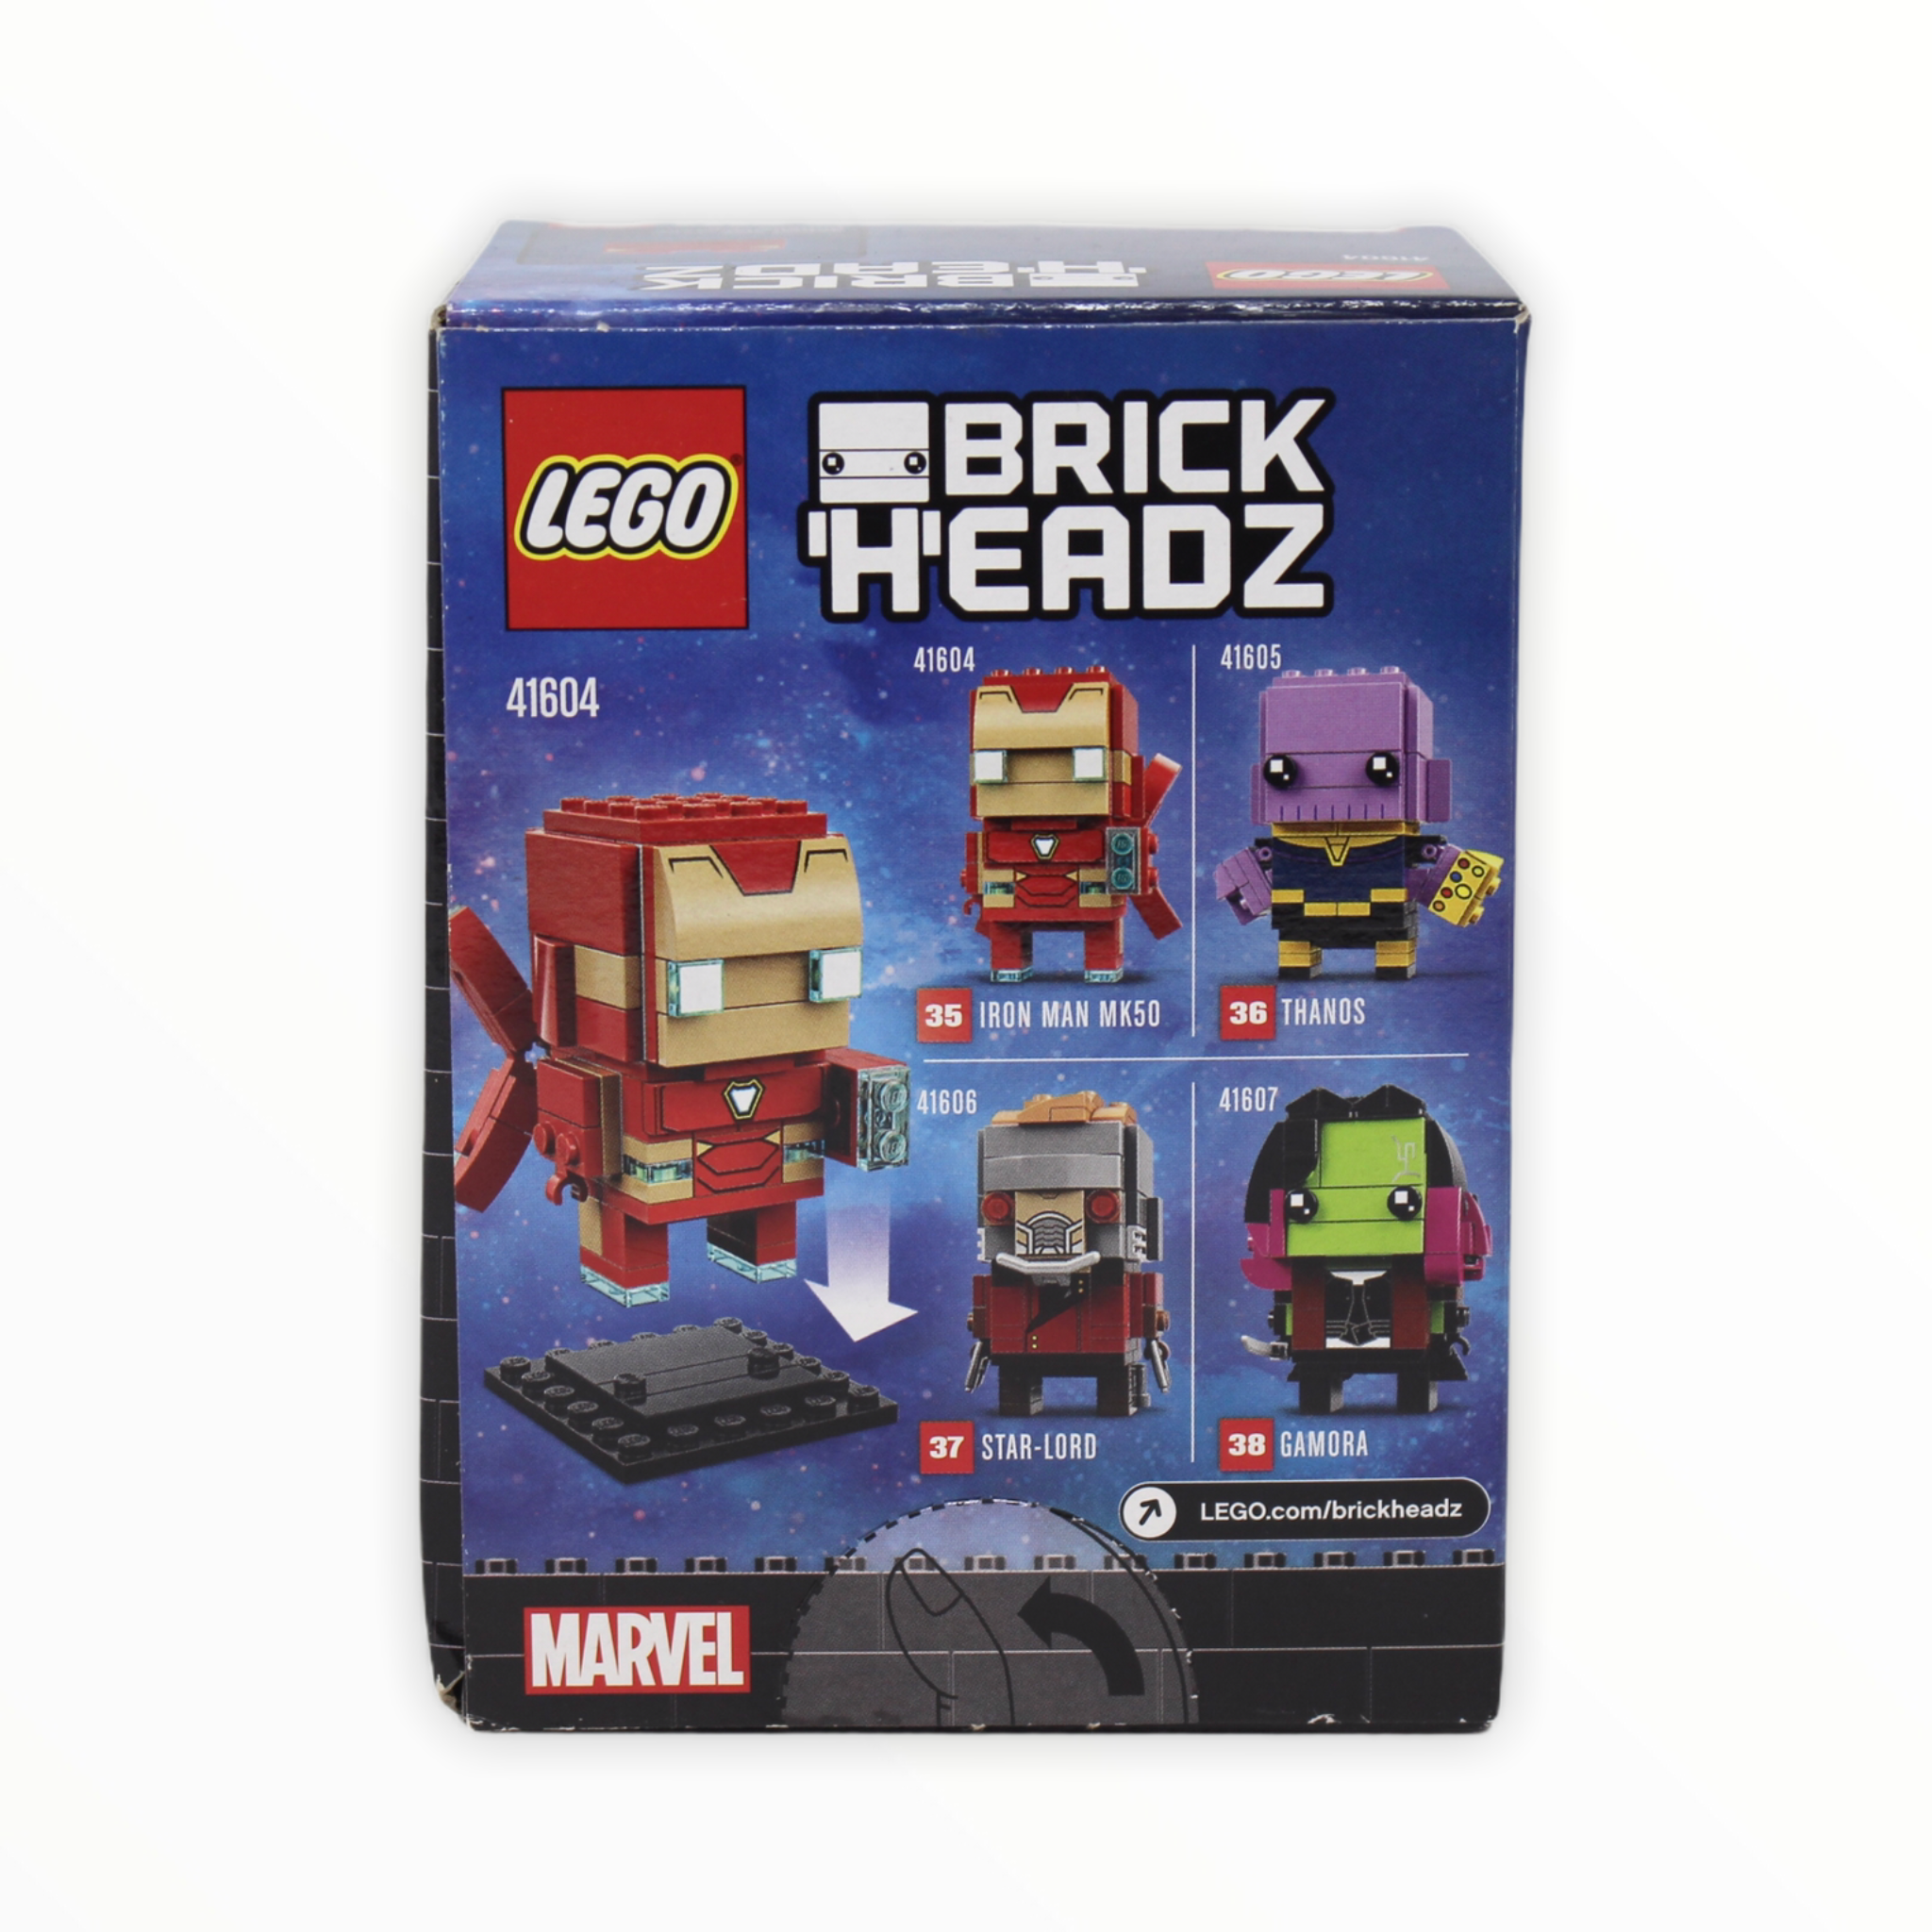 Retired Set 41604 Marvel BrickHeadz Iron Man MK50